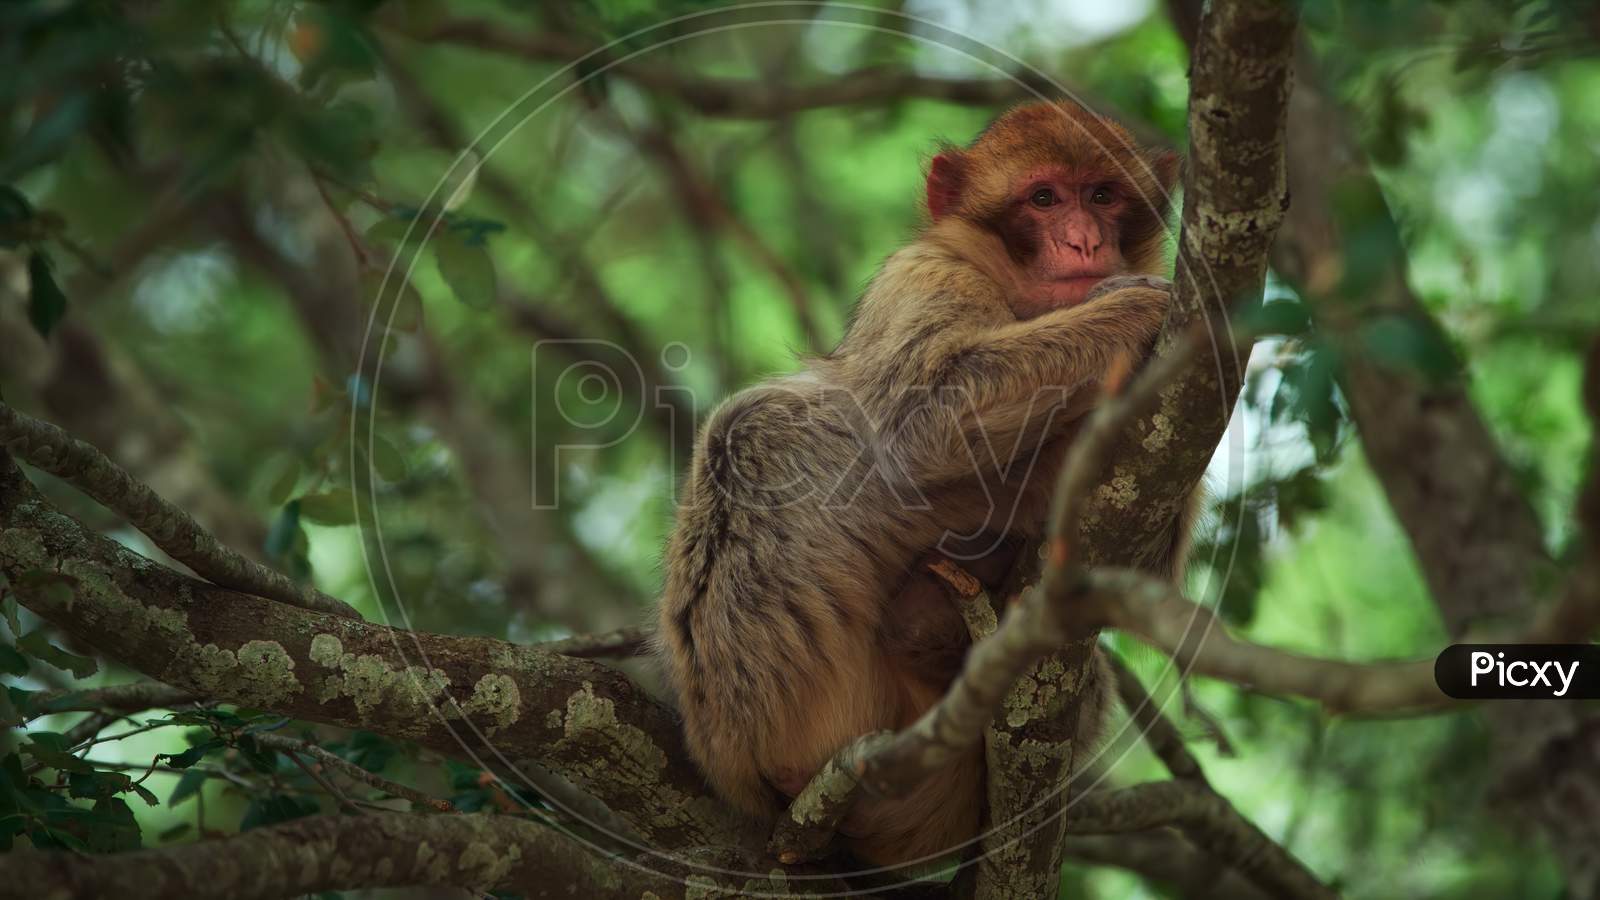 Monkey sitting on the tree Peacefully.